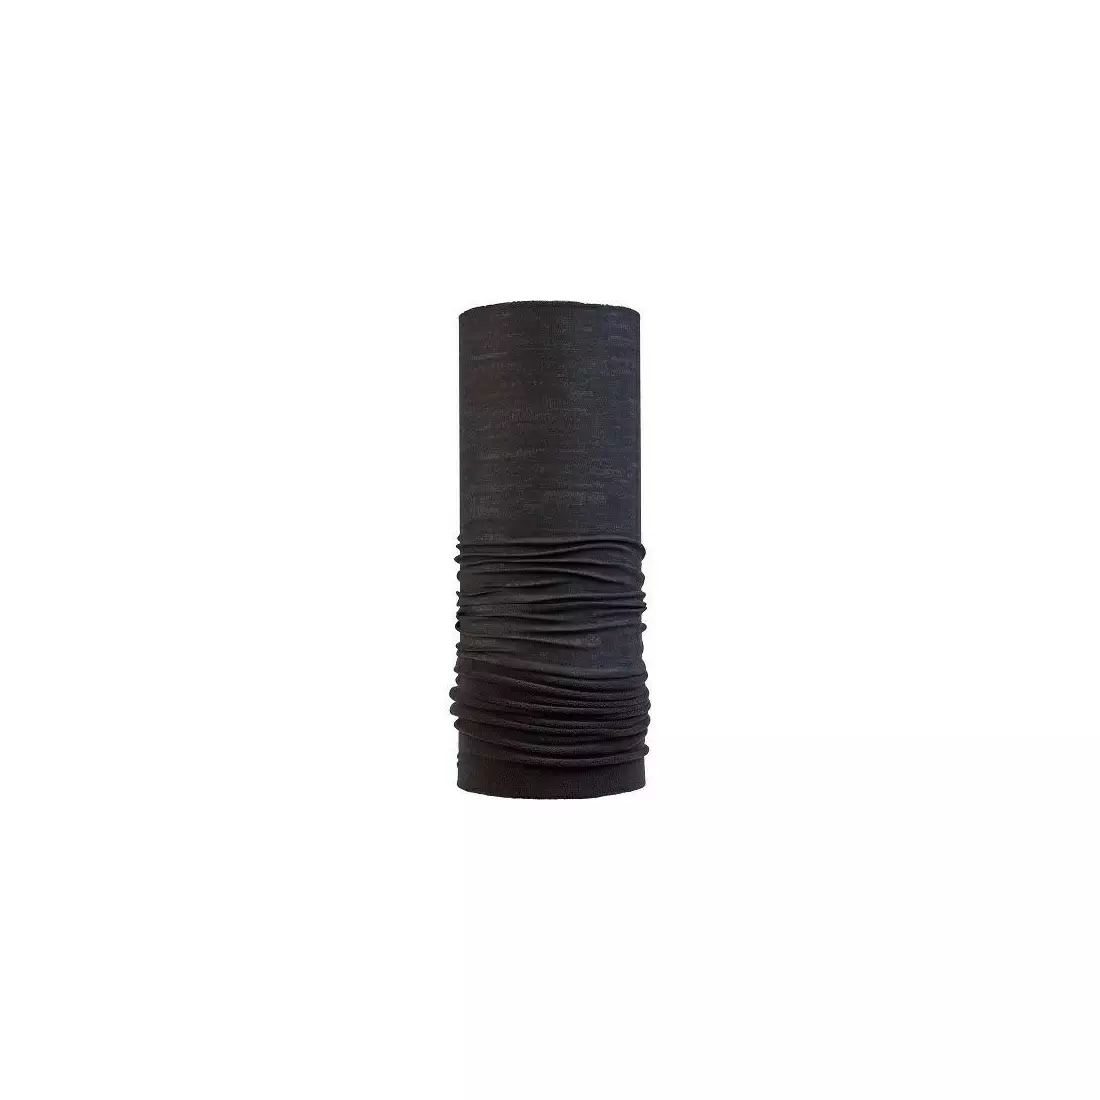 CAIRN multifunctional scarf MALAWI POLAR TUBE black